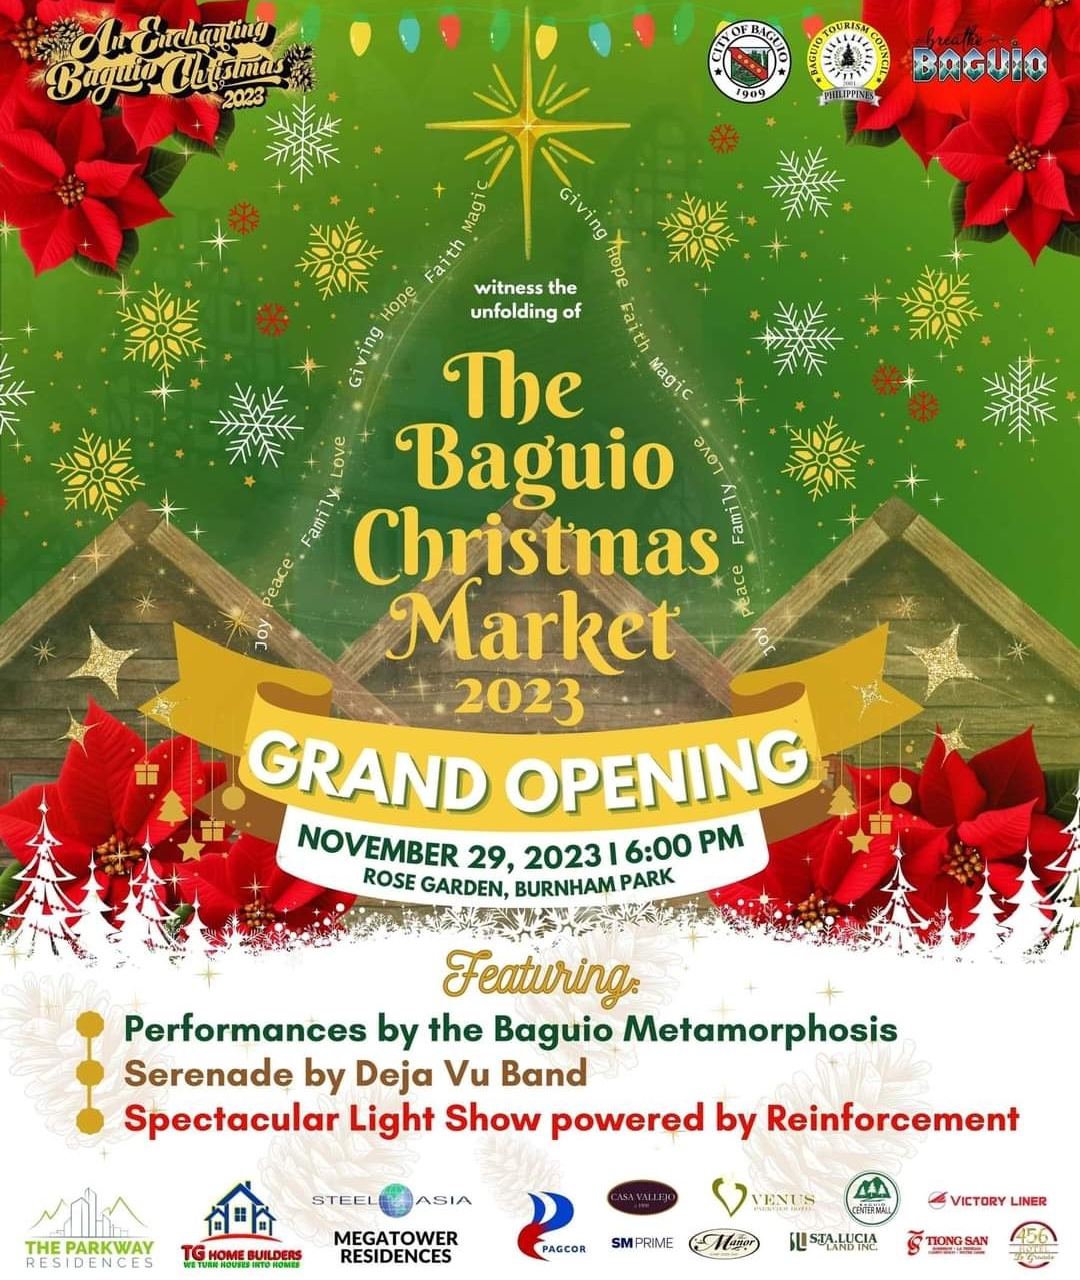 Baguio Christmas Market opens on November 29